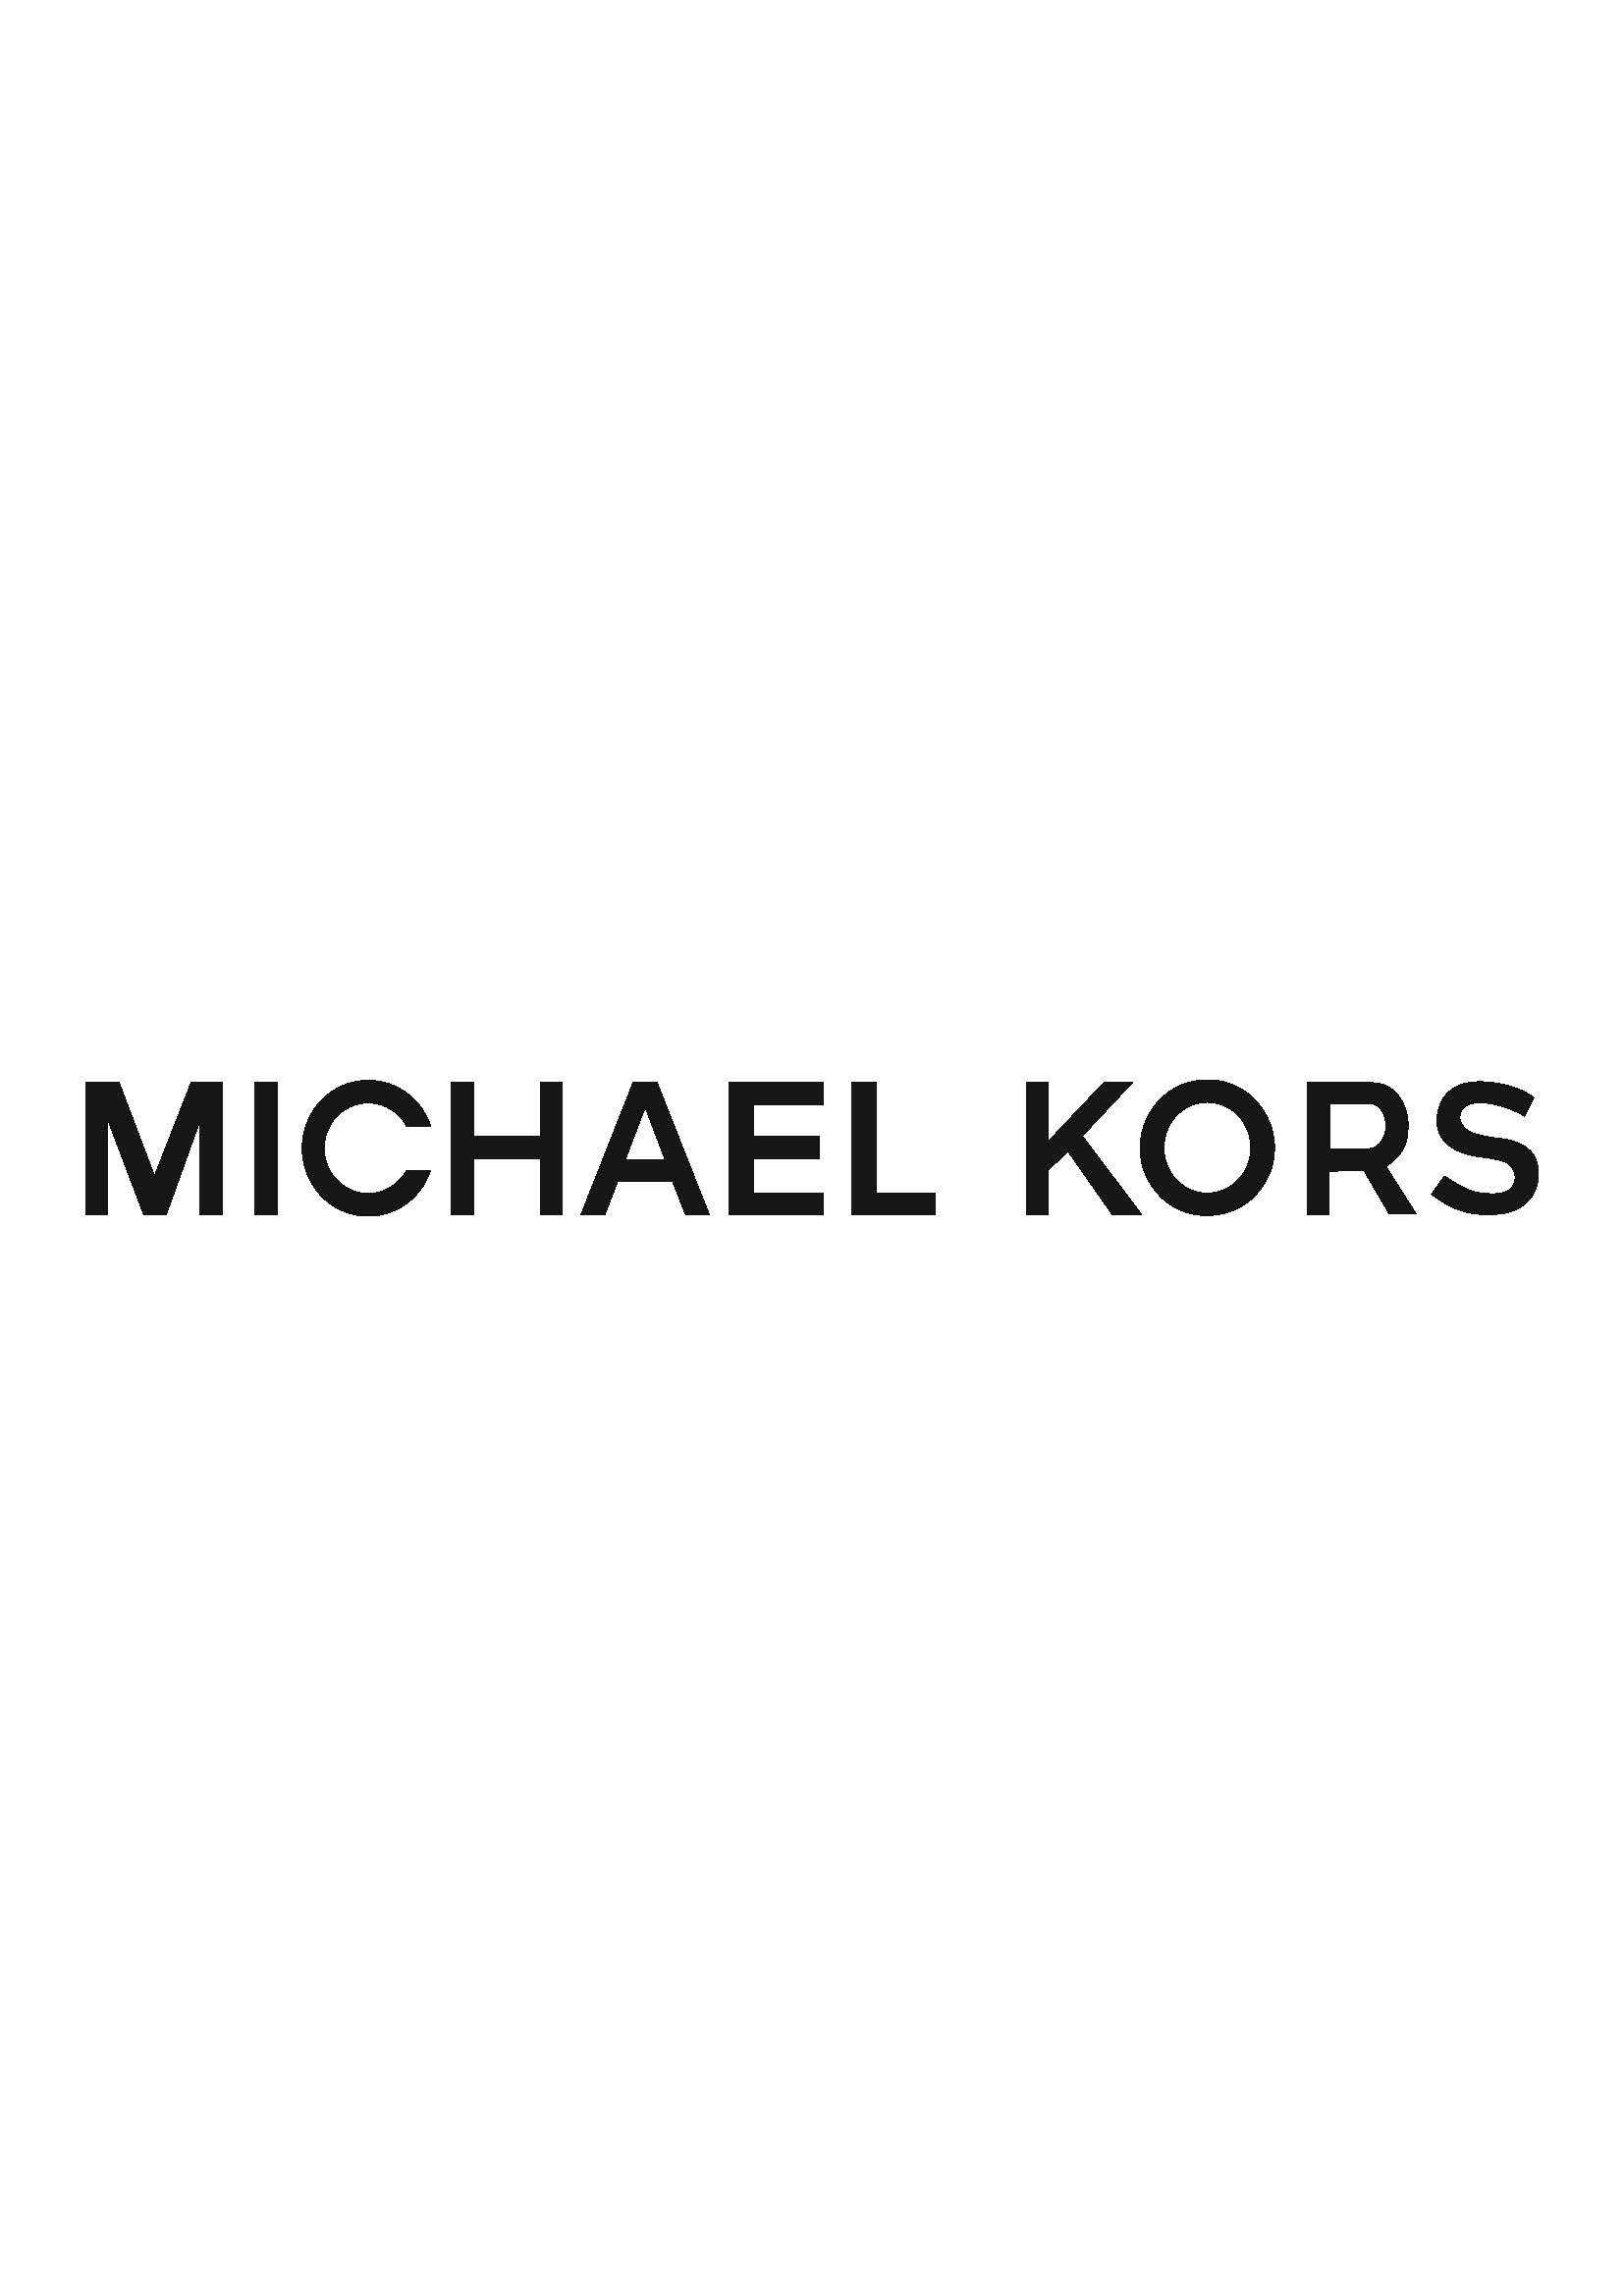 Michael-Kors-Logo-e1523905120406.png